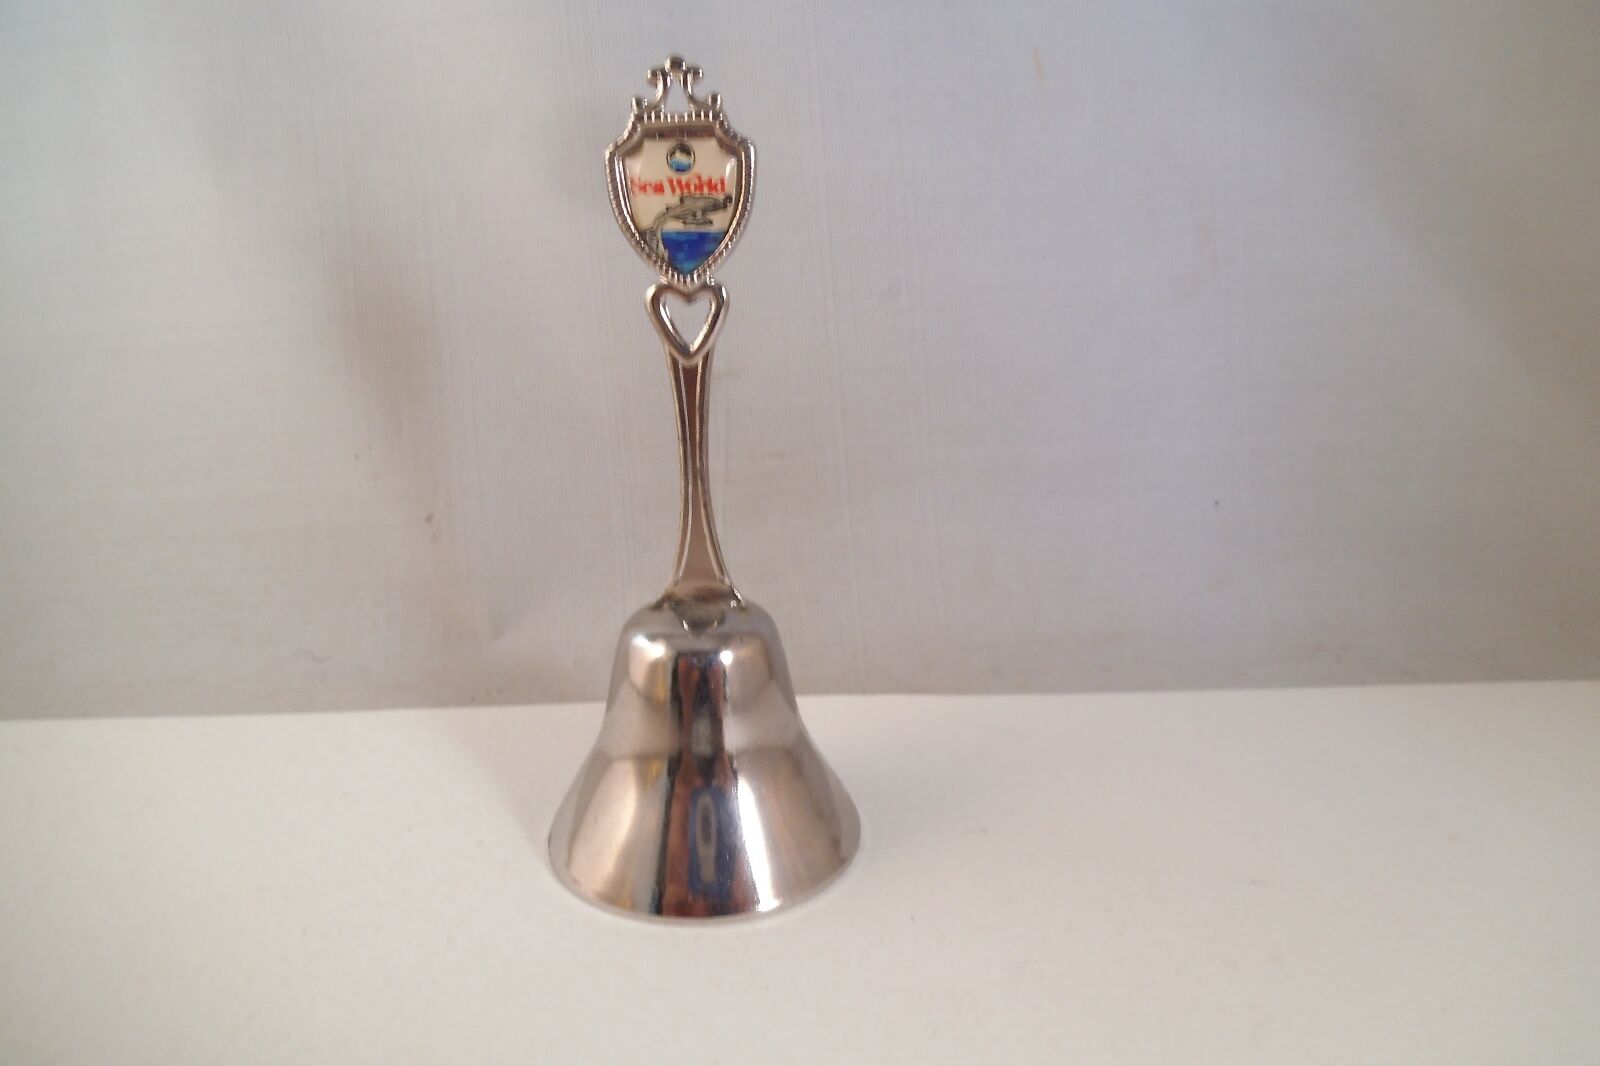 Vintage Sea World Shamu Souvenir Bell